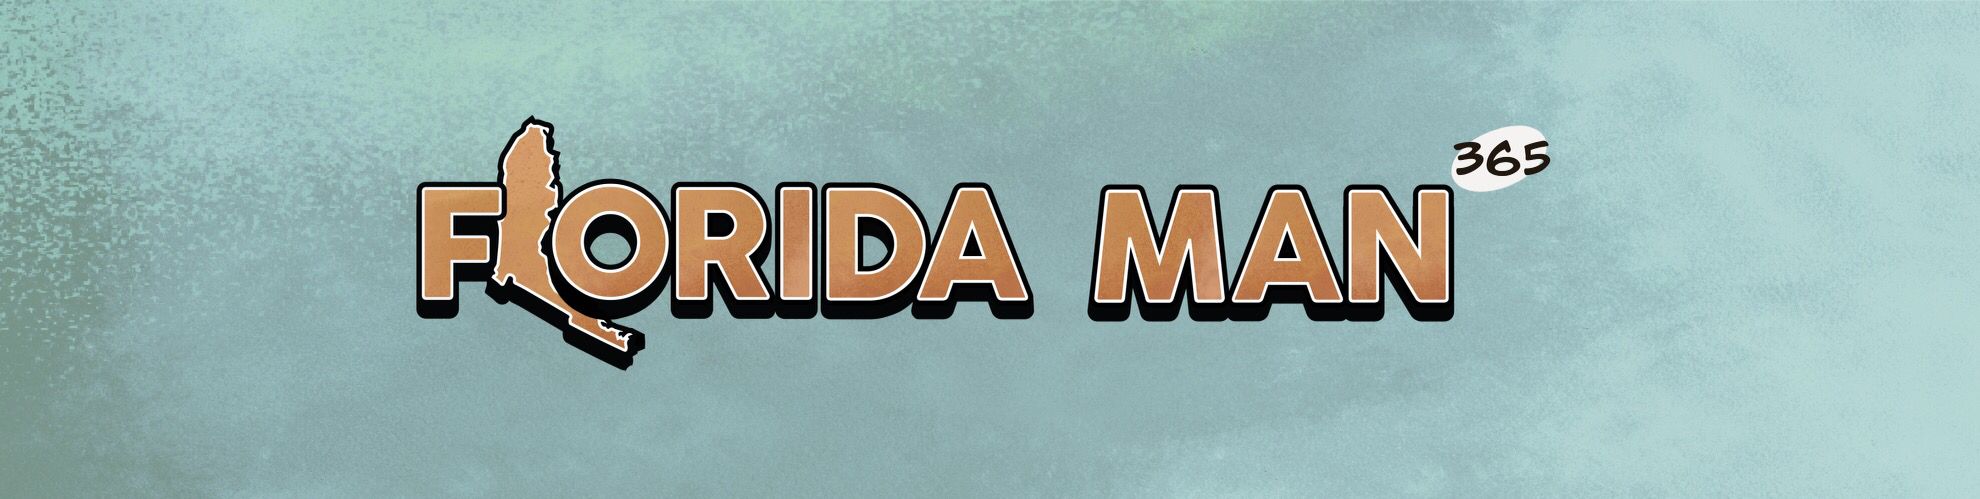 Florida Man banner